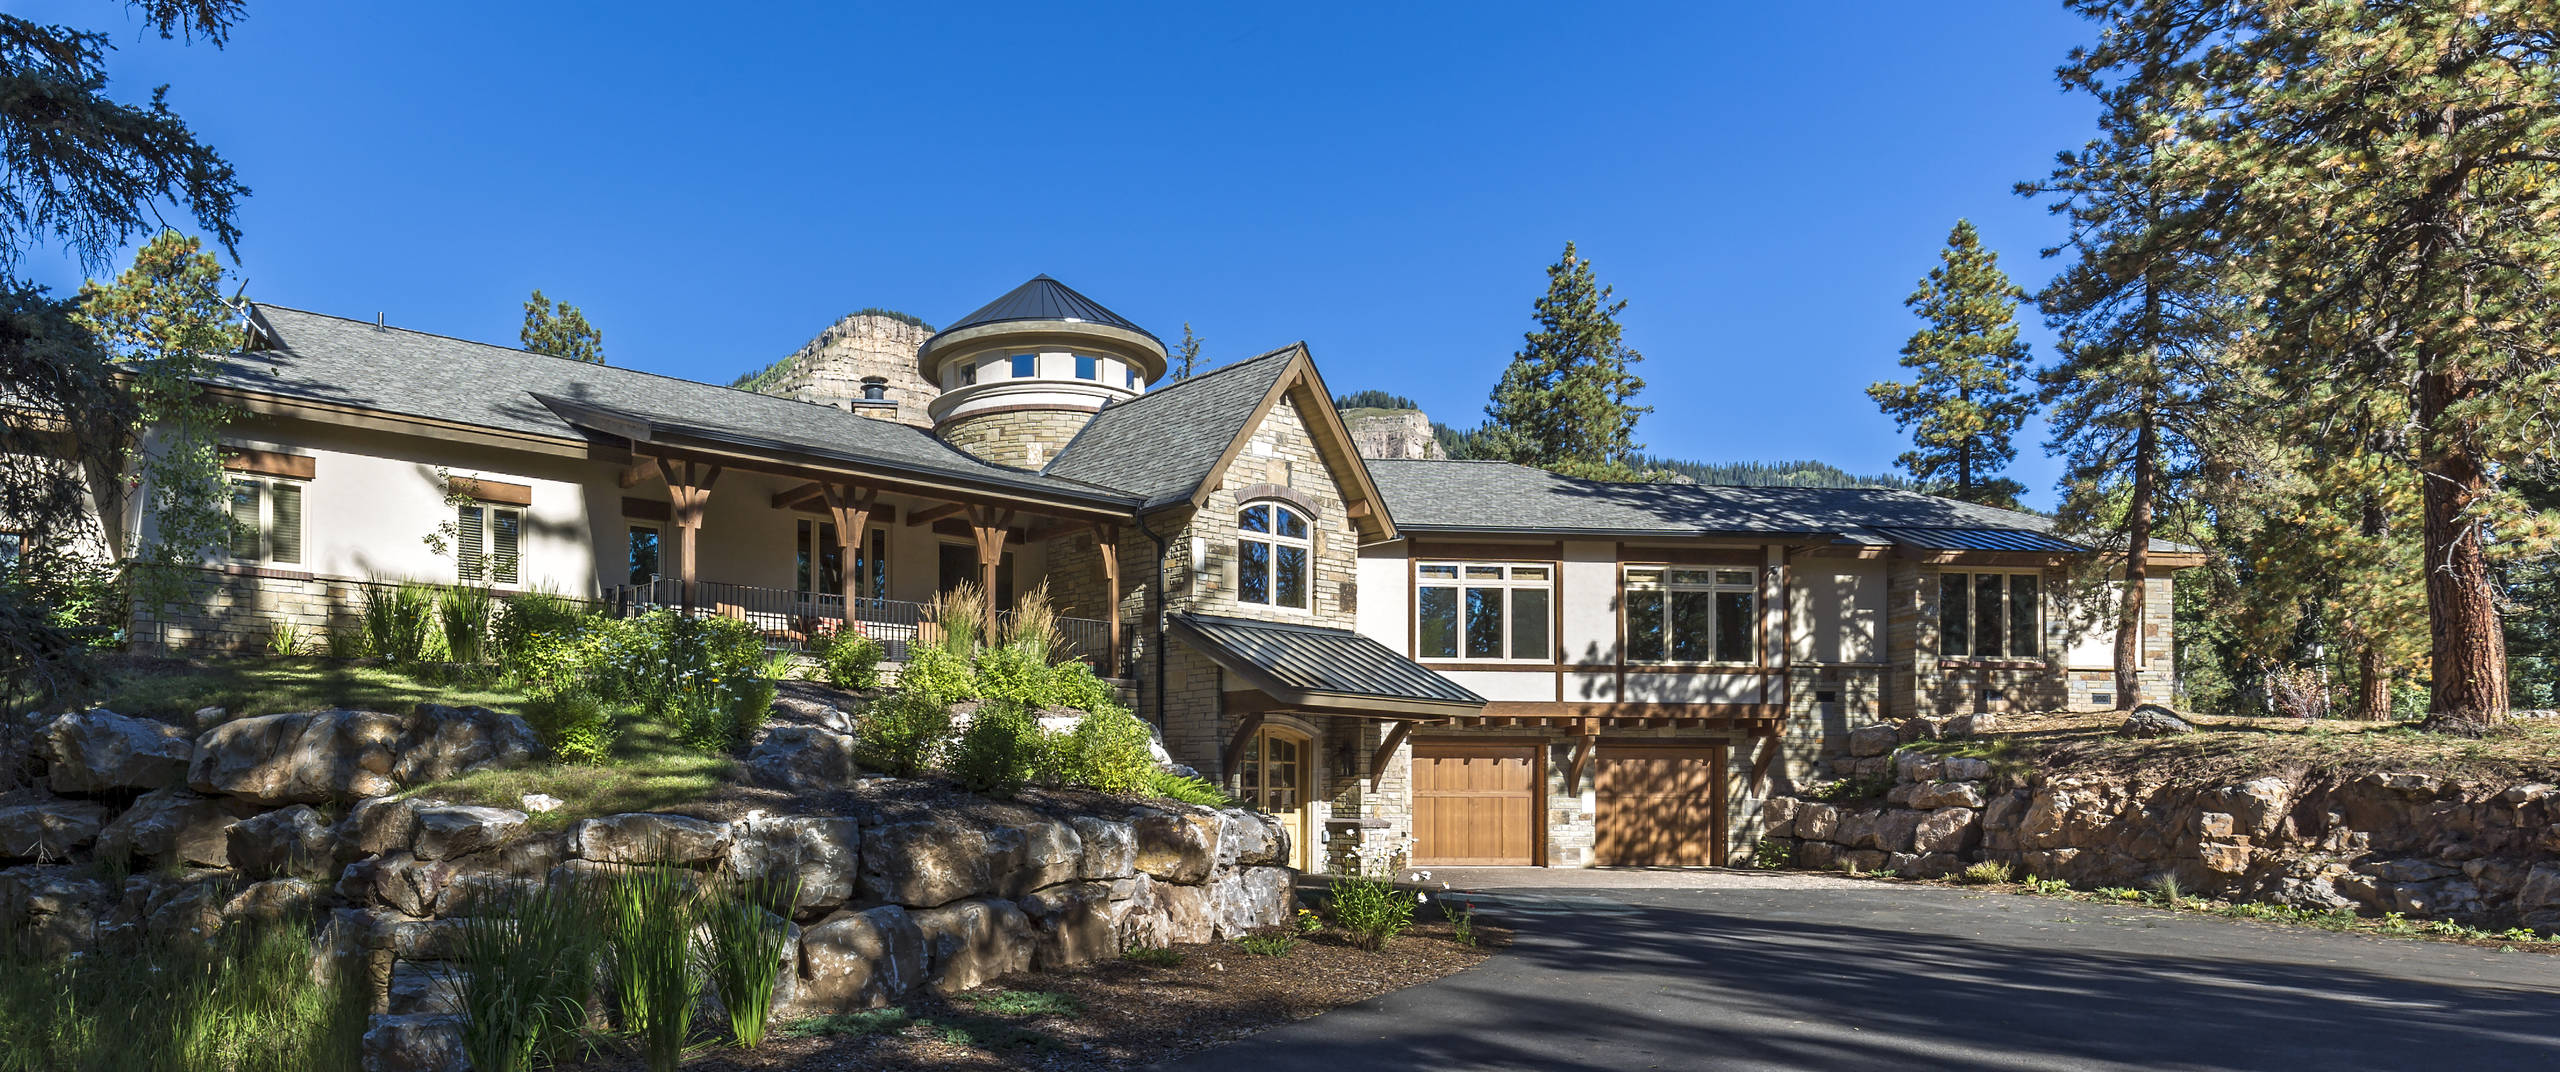 Certified Luxury Builders - Veritas Fine Homes Inc - Durango, CO - Weems Home